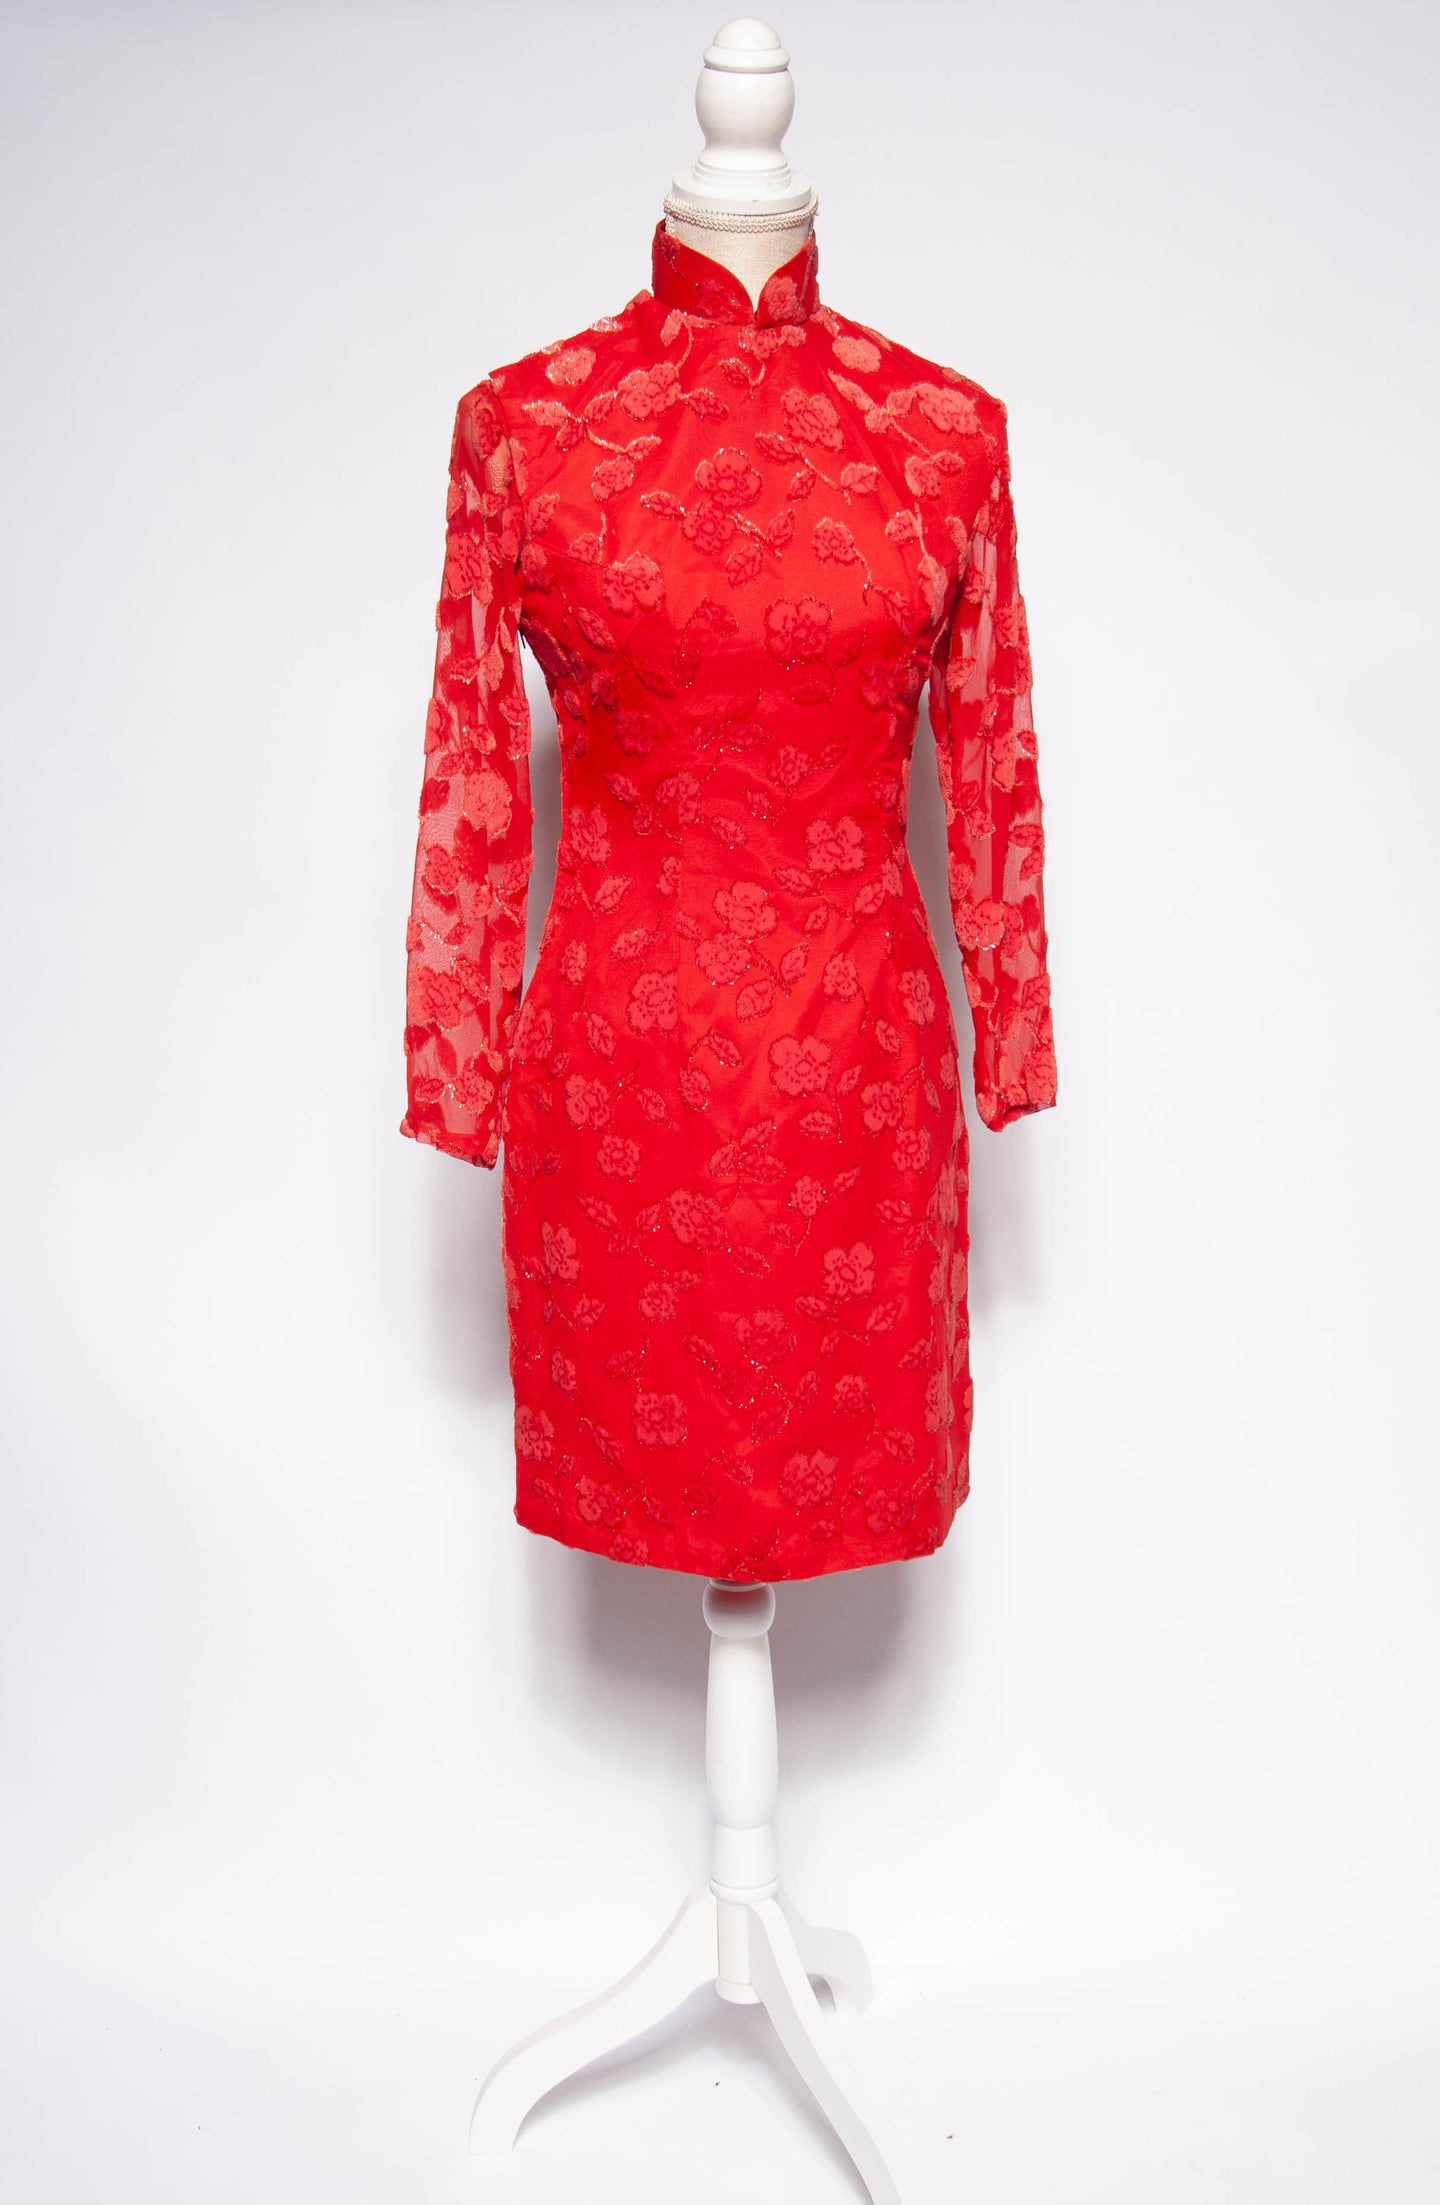 VINTAGE 1960S RED SILK LONGSLEEVE CHEONGSAM STYLE DRESS